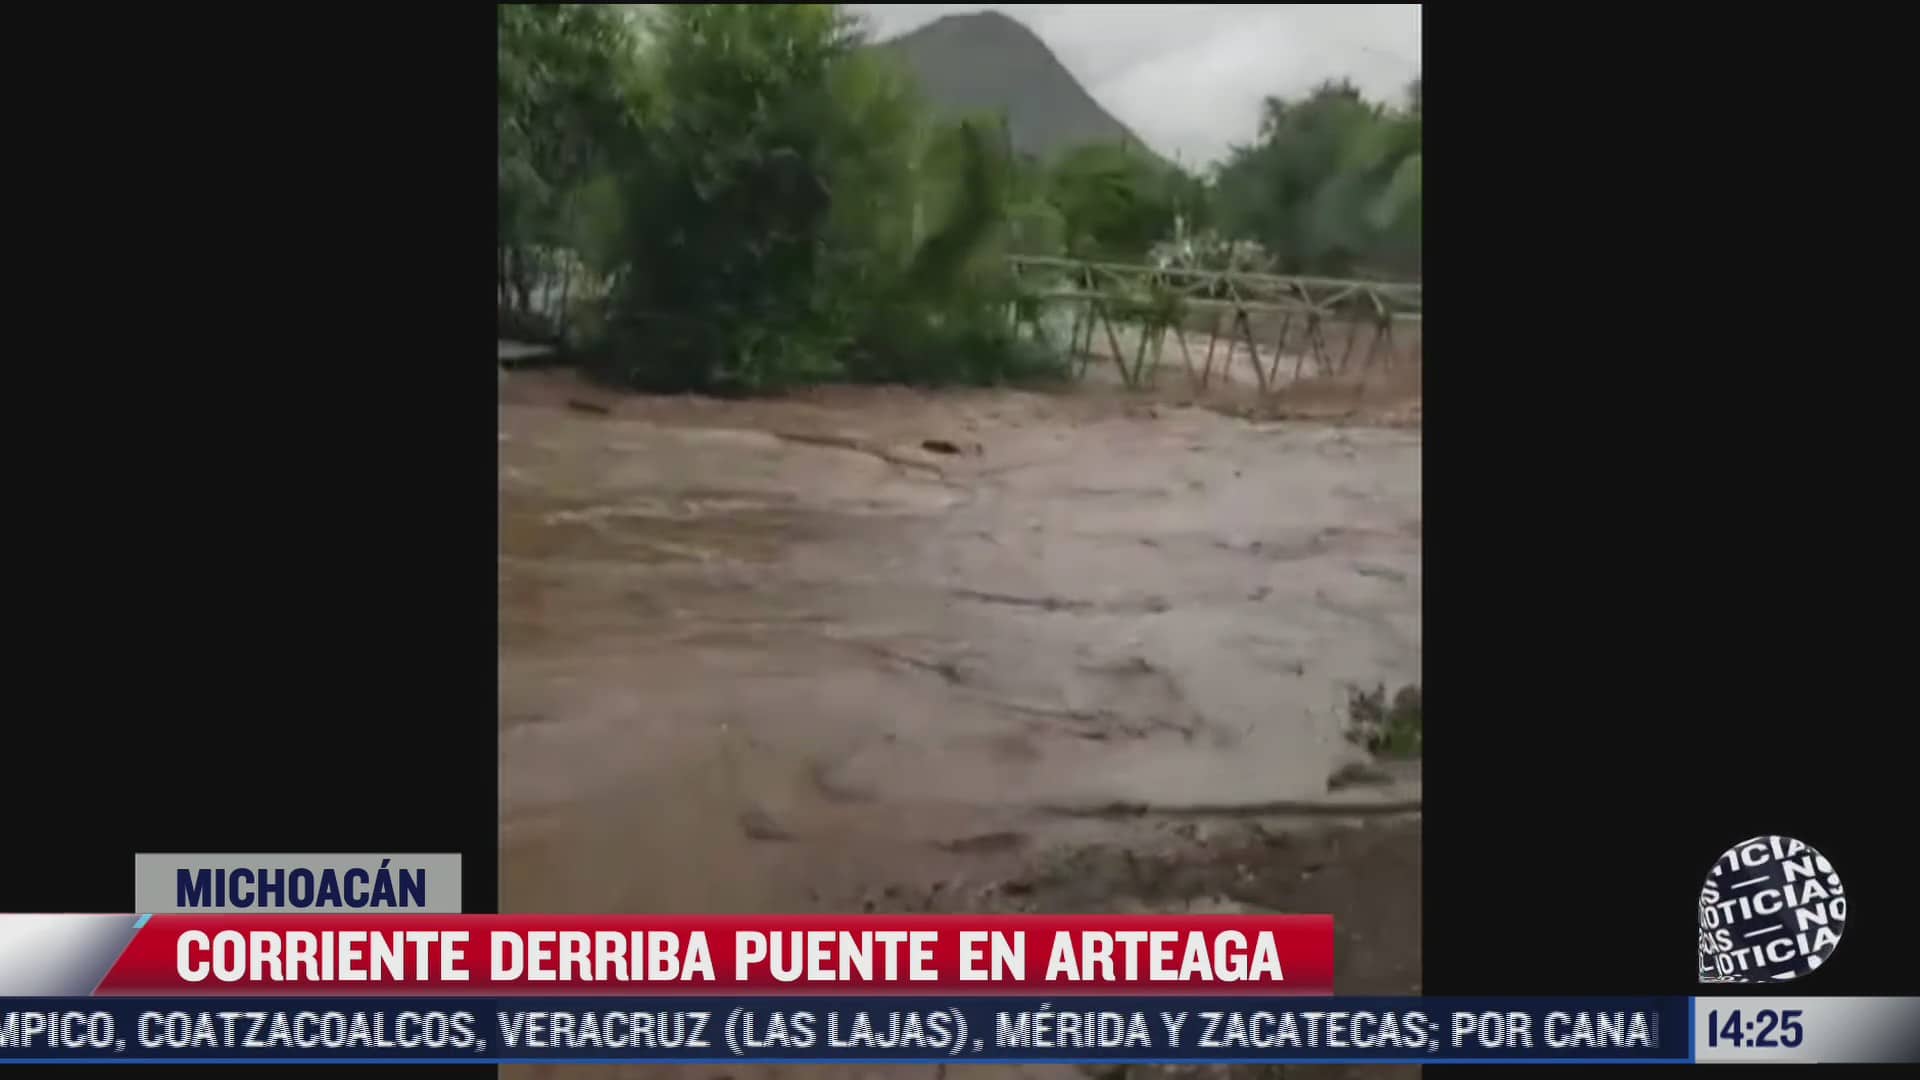 rick derriba puente en arteaga michoacan